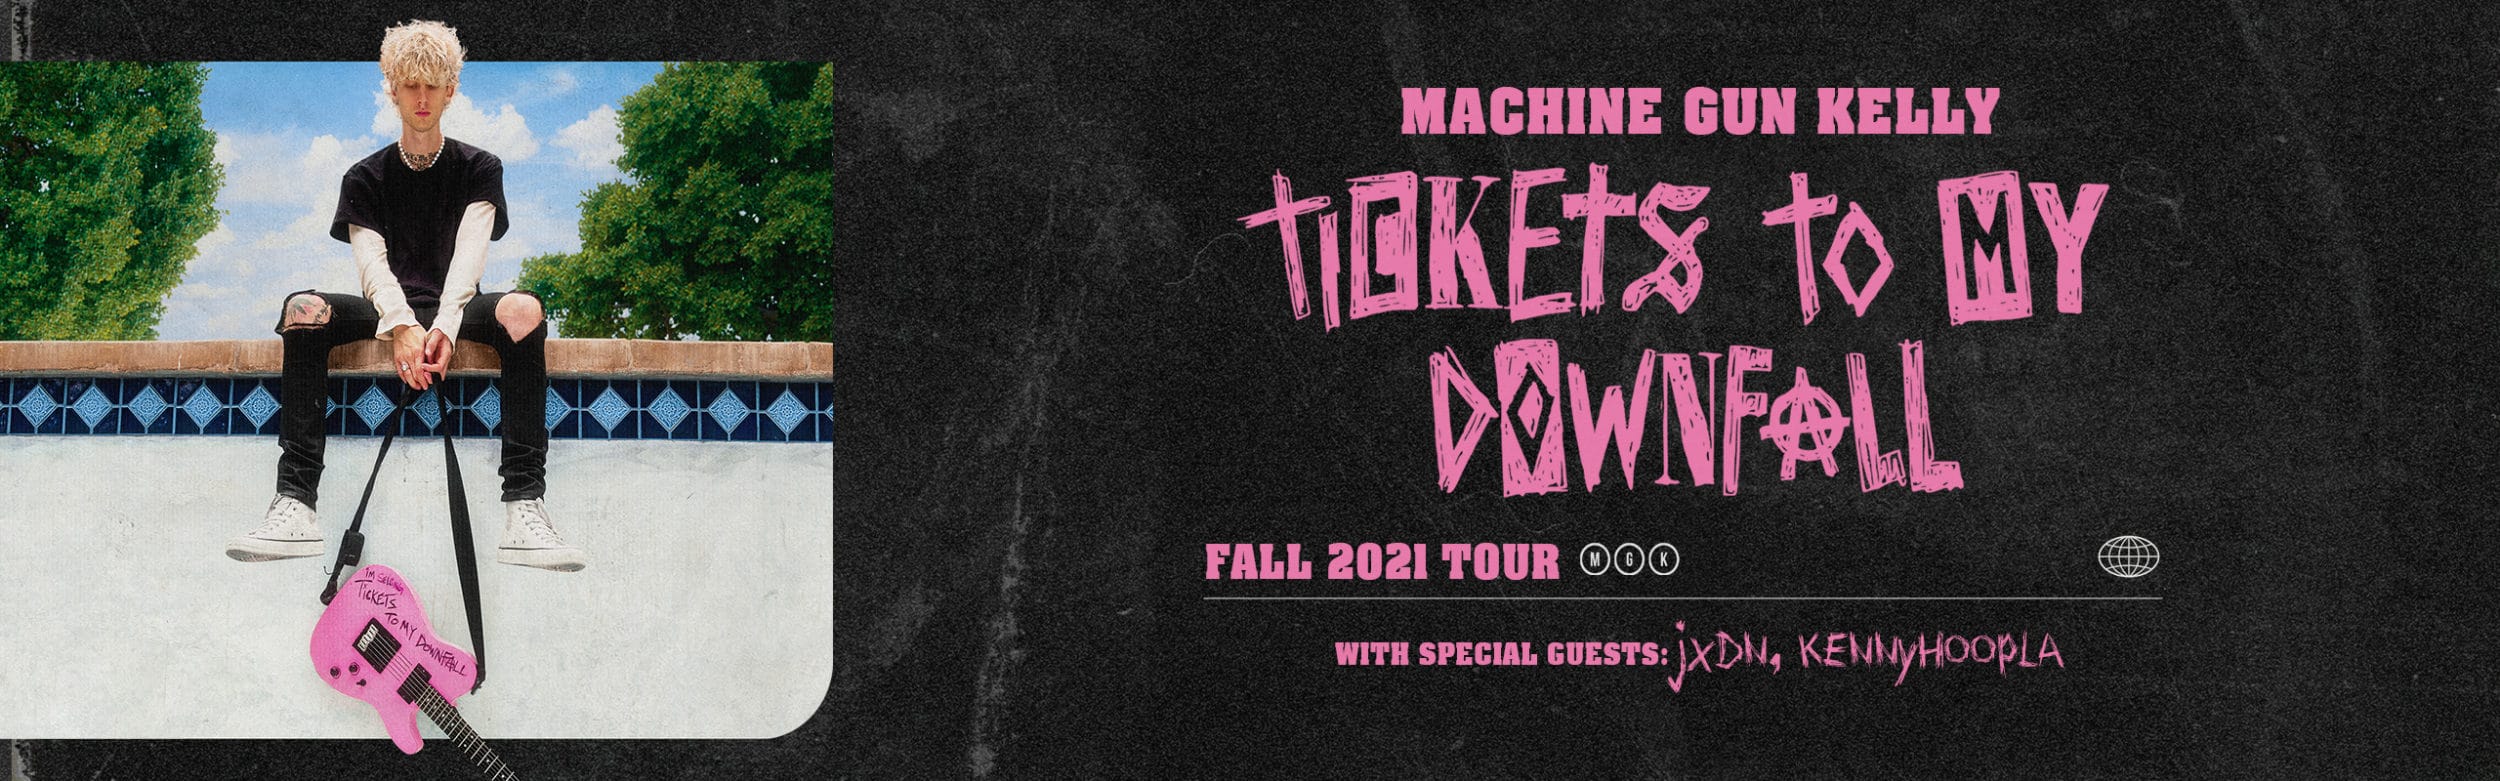 Machine Gun Kelly – Tickets to My Downfall Tour 2021